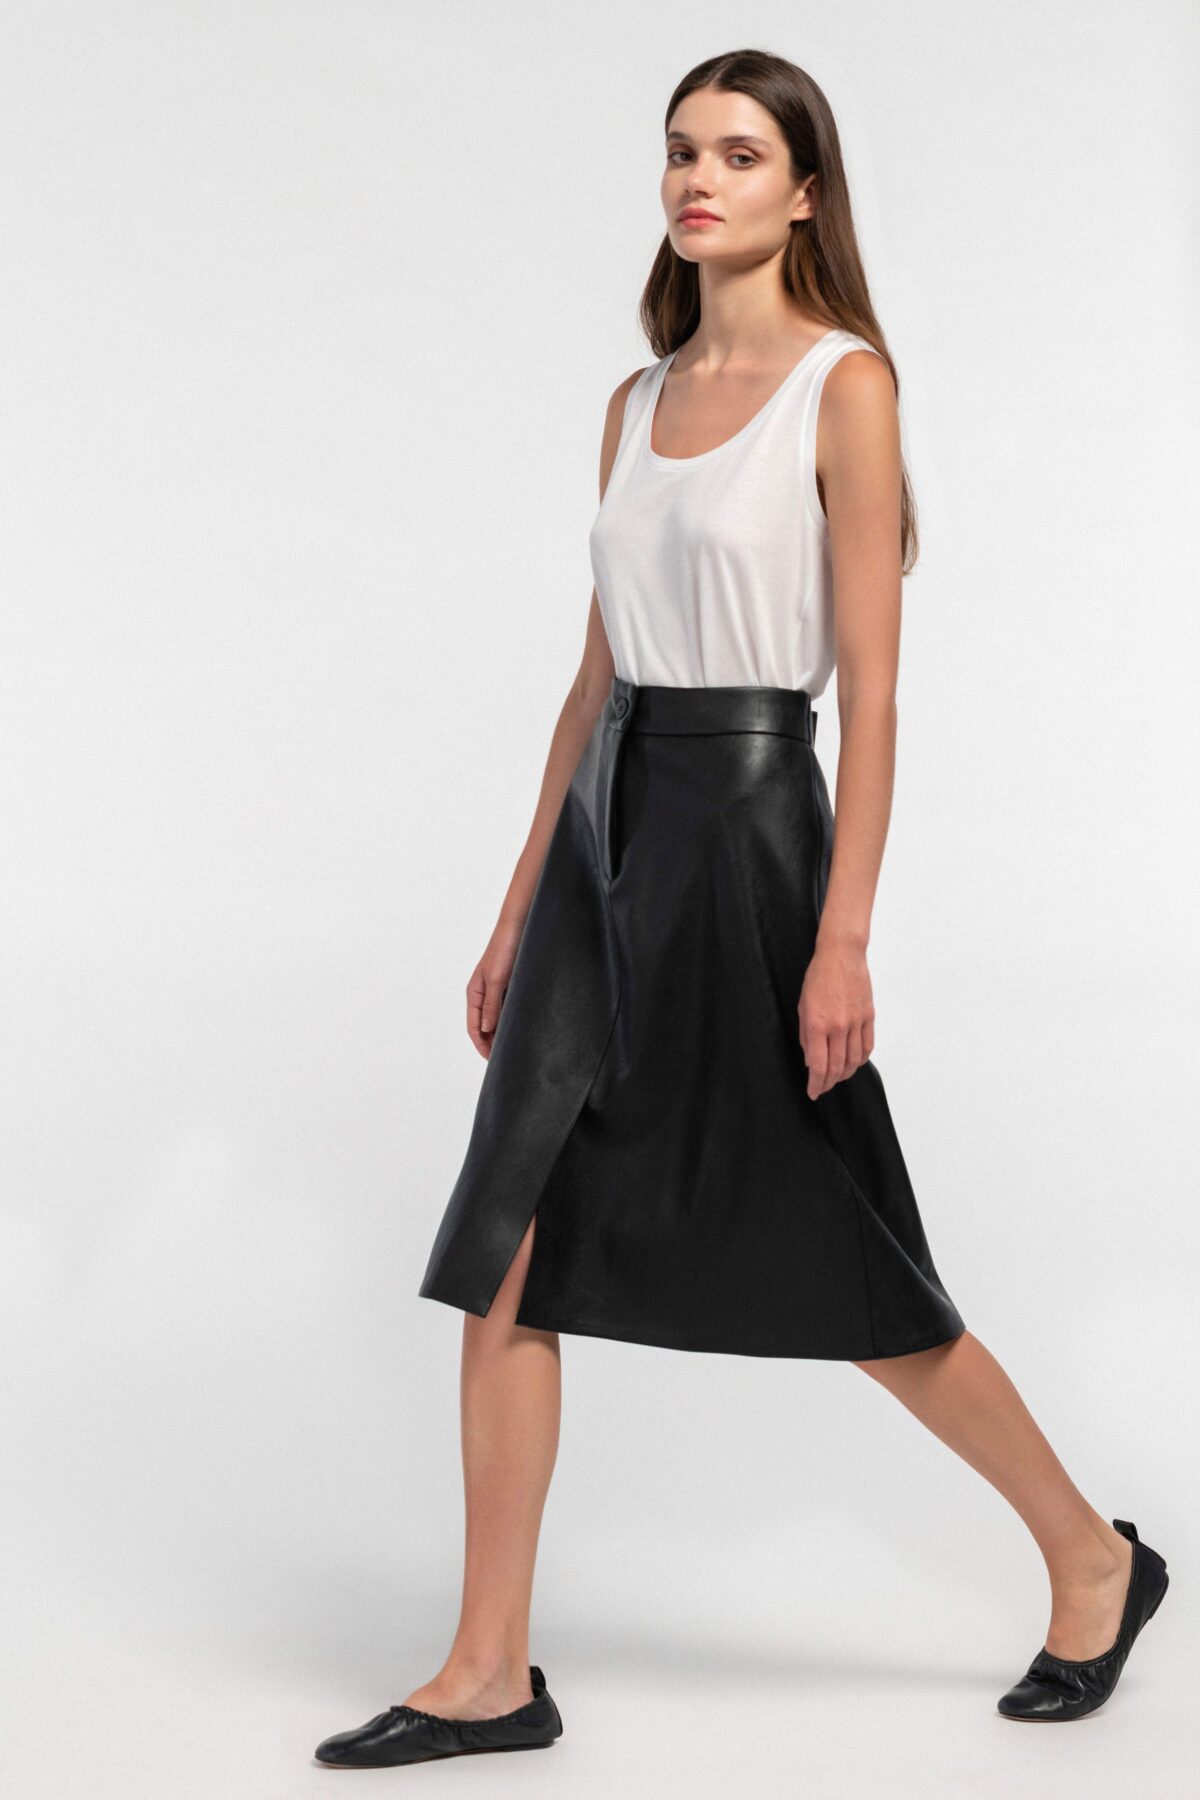 Philosophy leather midi skirt